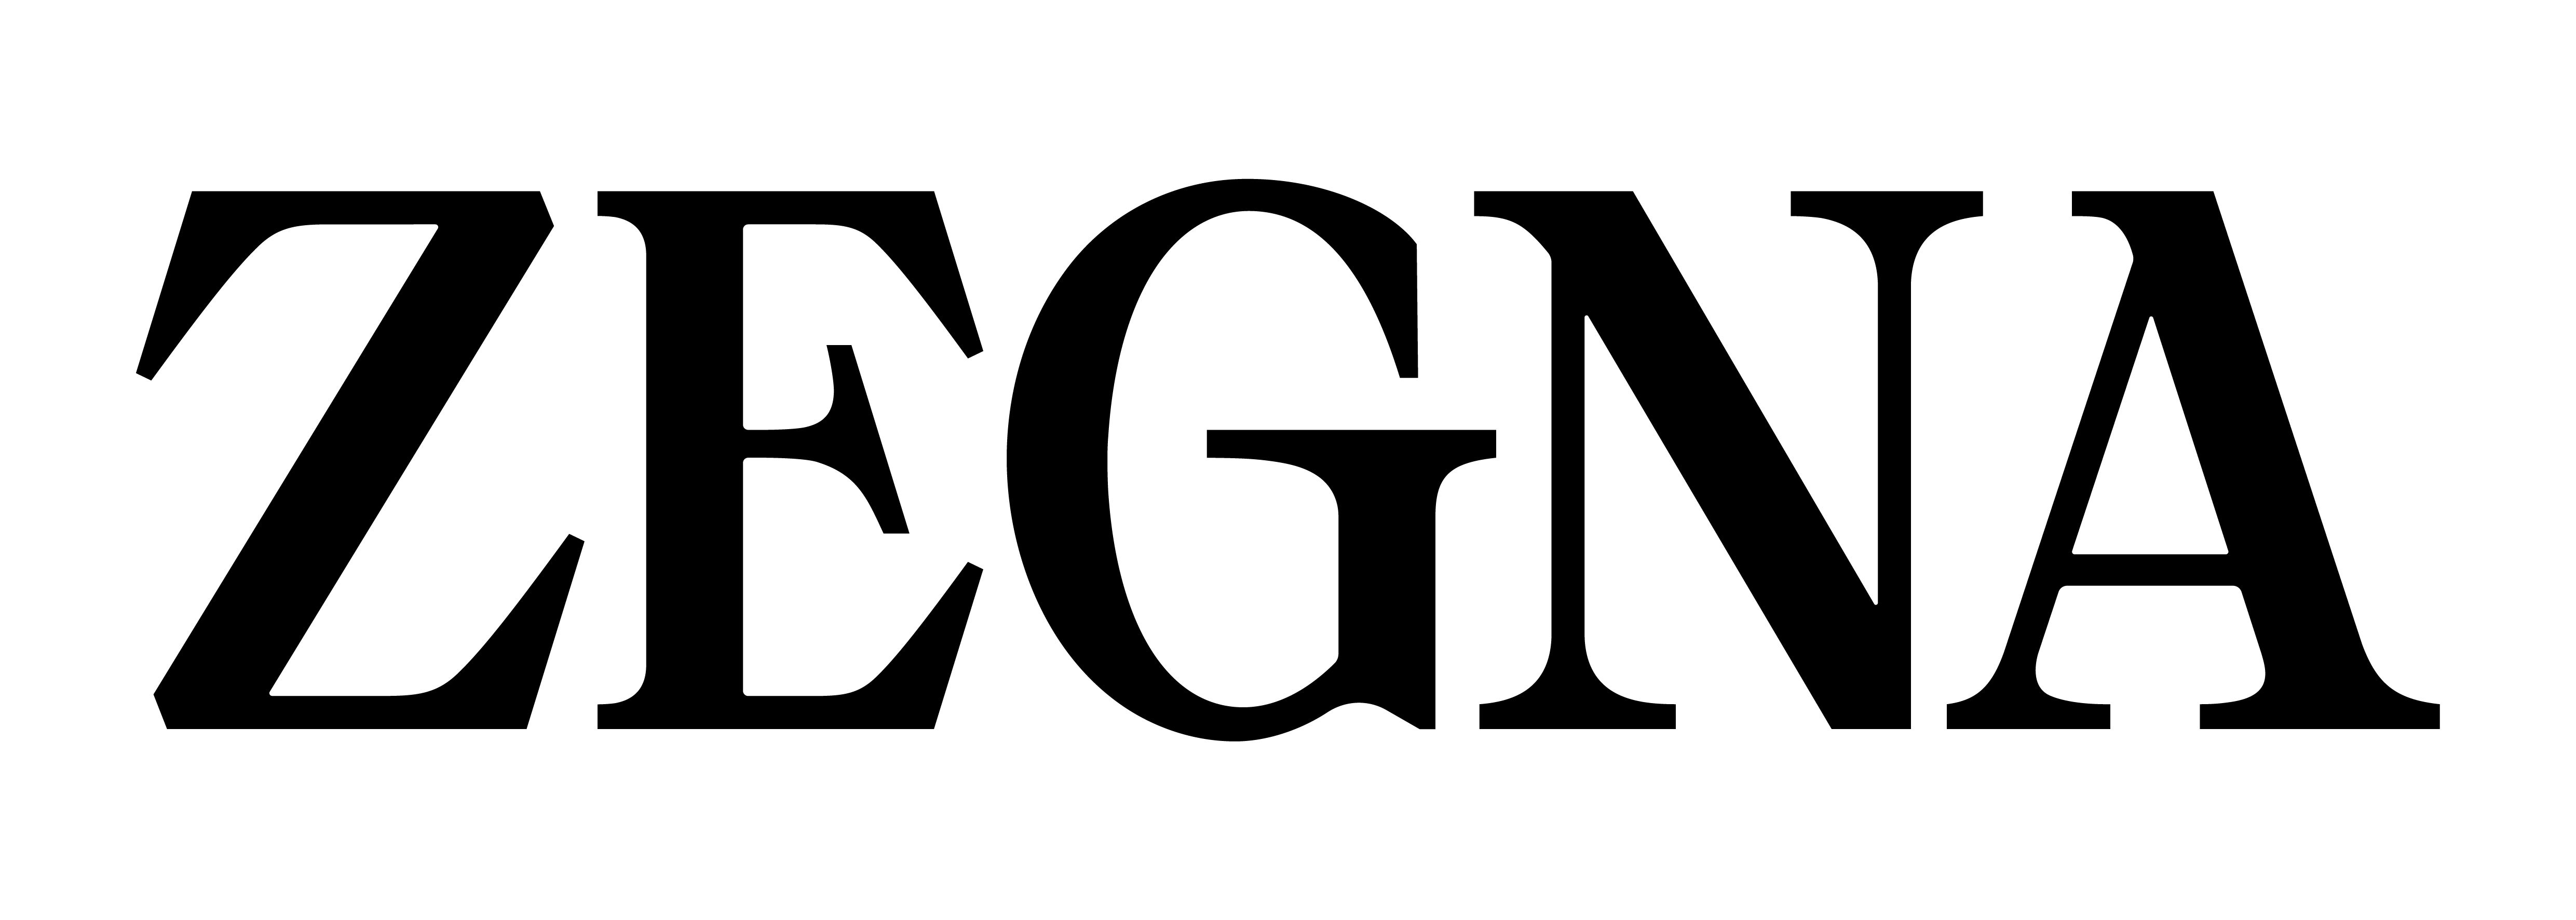 Zegna-Logotype-RGB.jpg